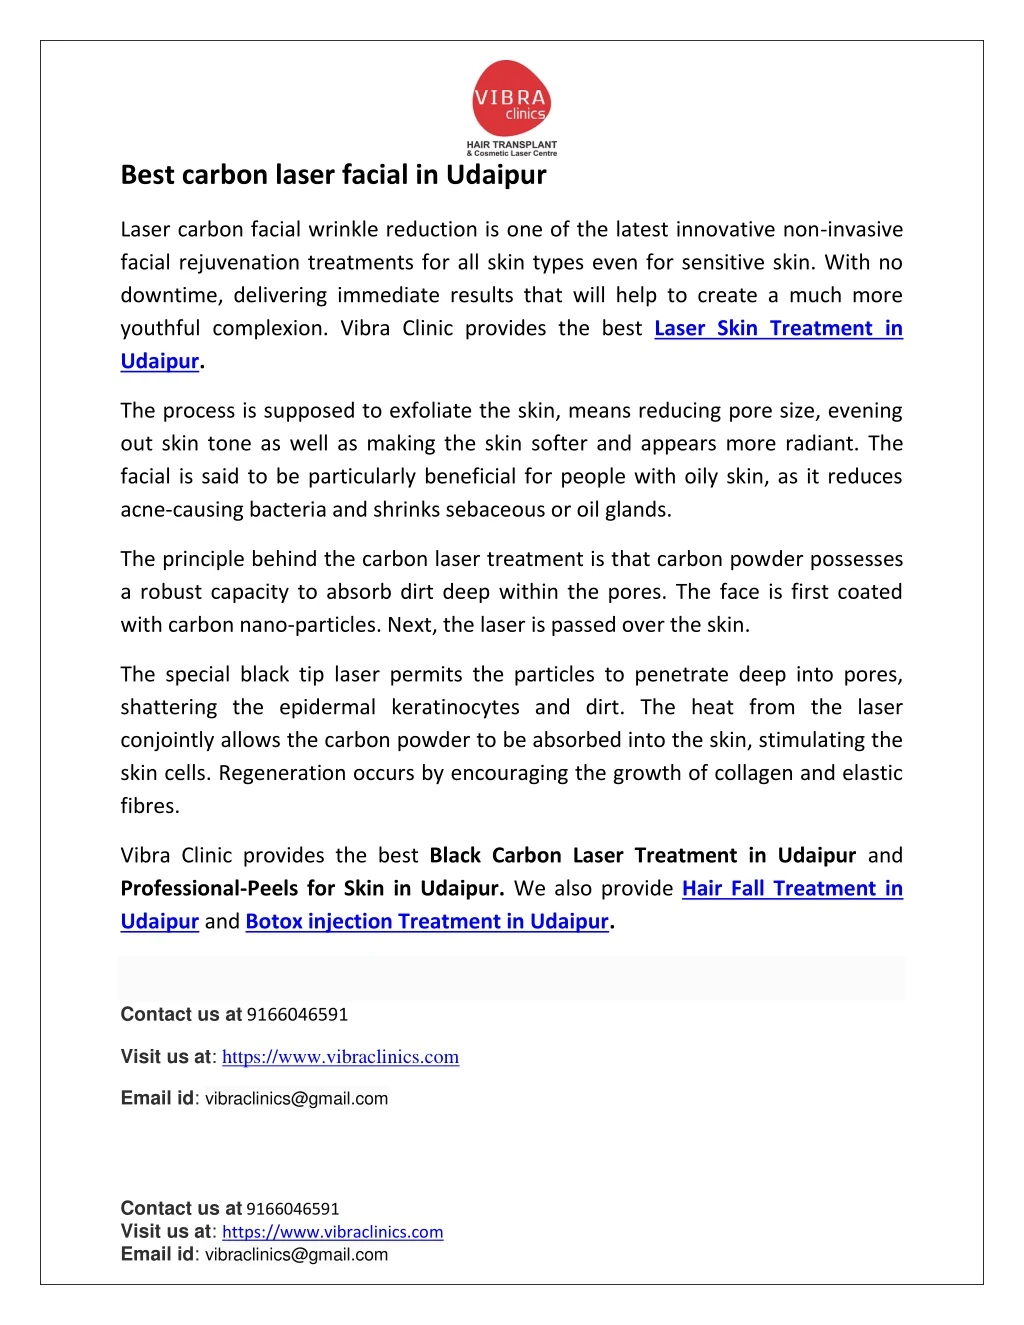 best carbon laser facial in udaipur